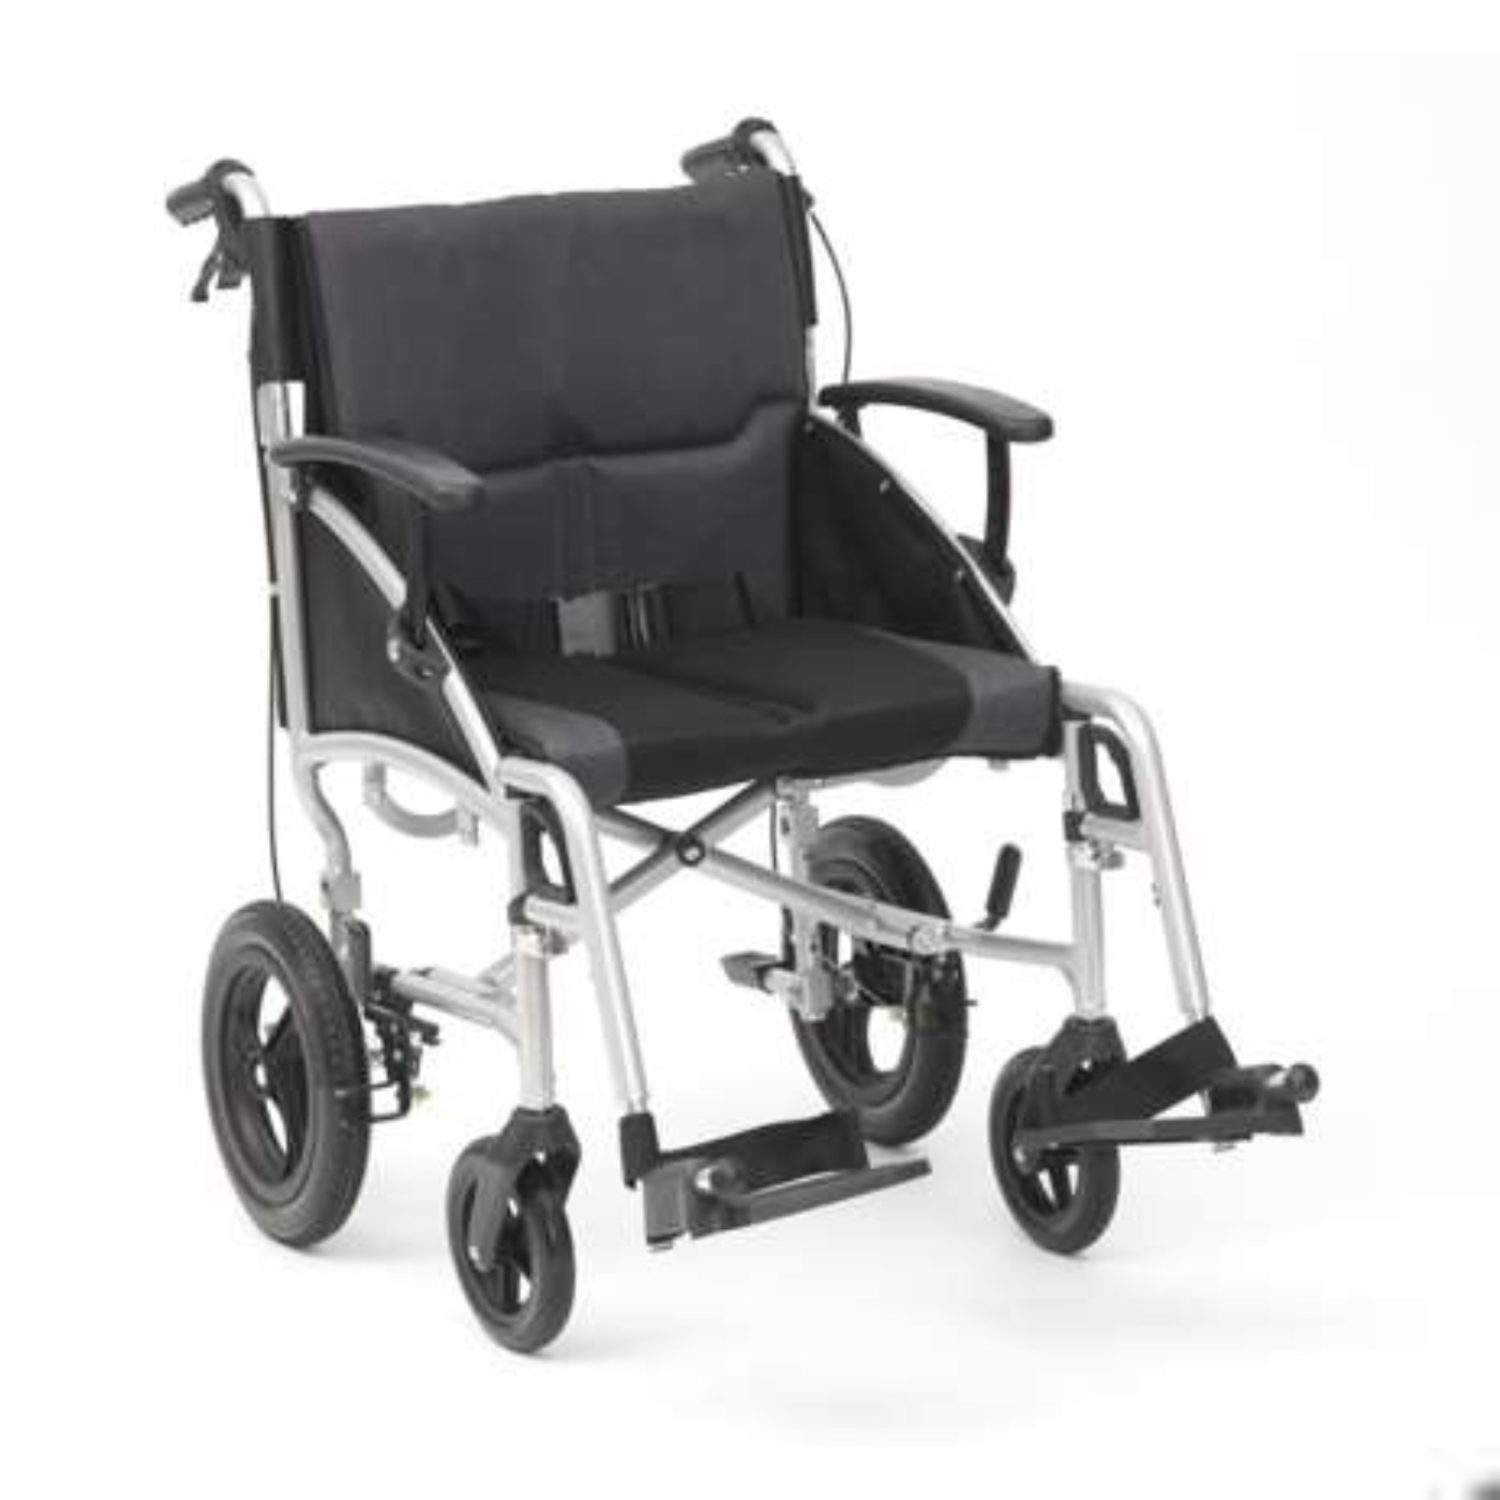 Transit Wheelchair